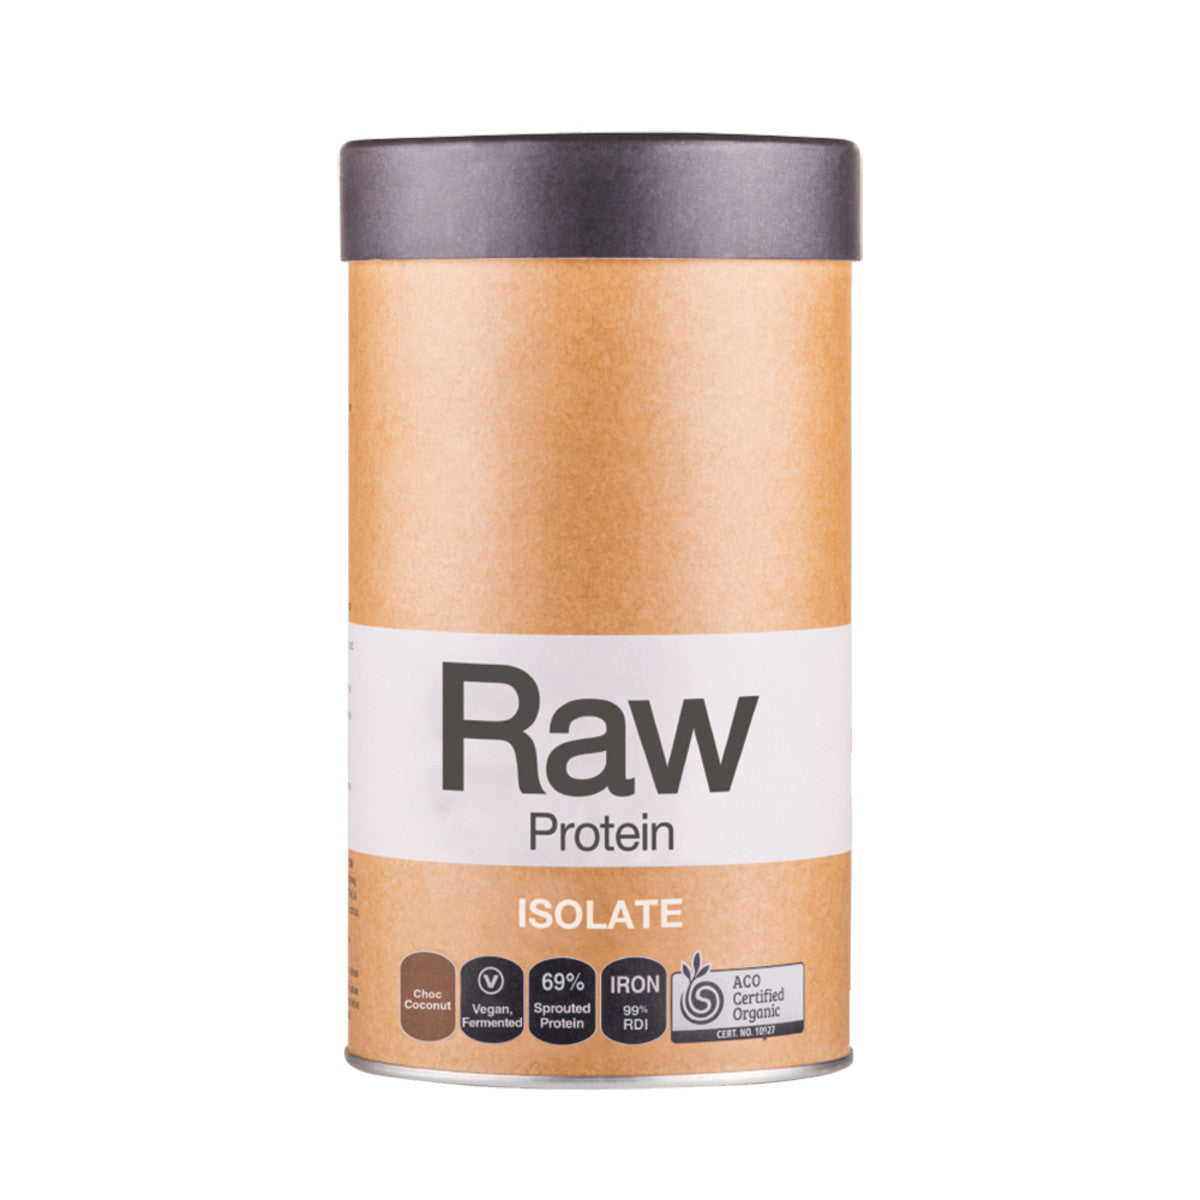 Amazonia - RAW Protein Isolate Choc Coconut